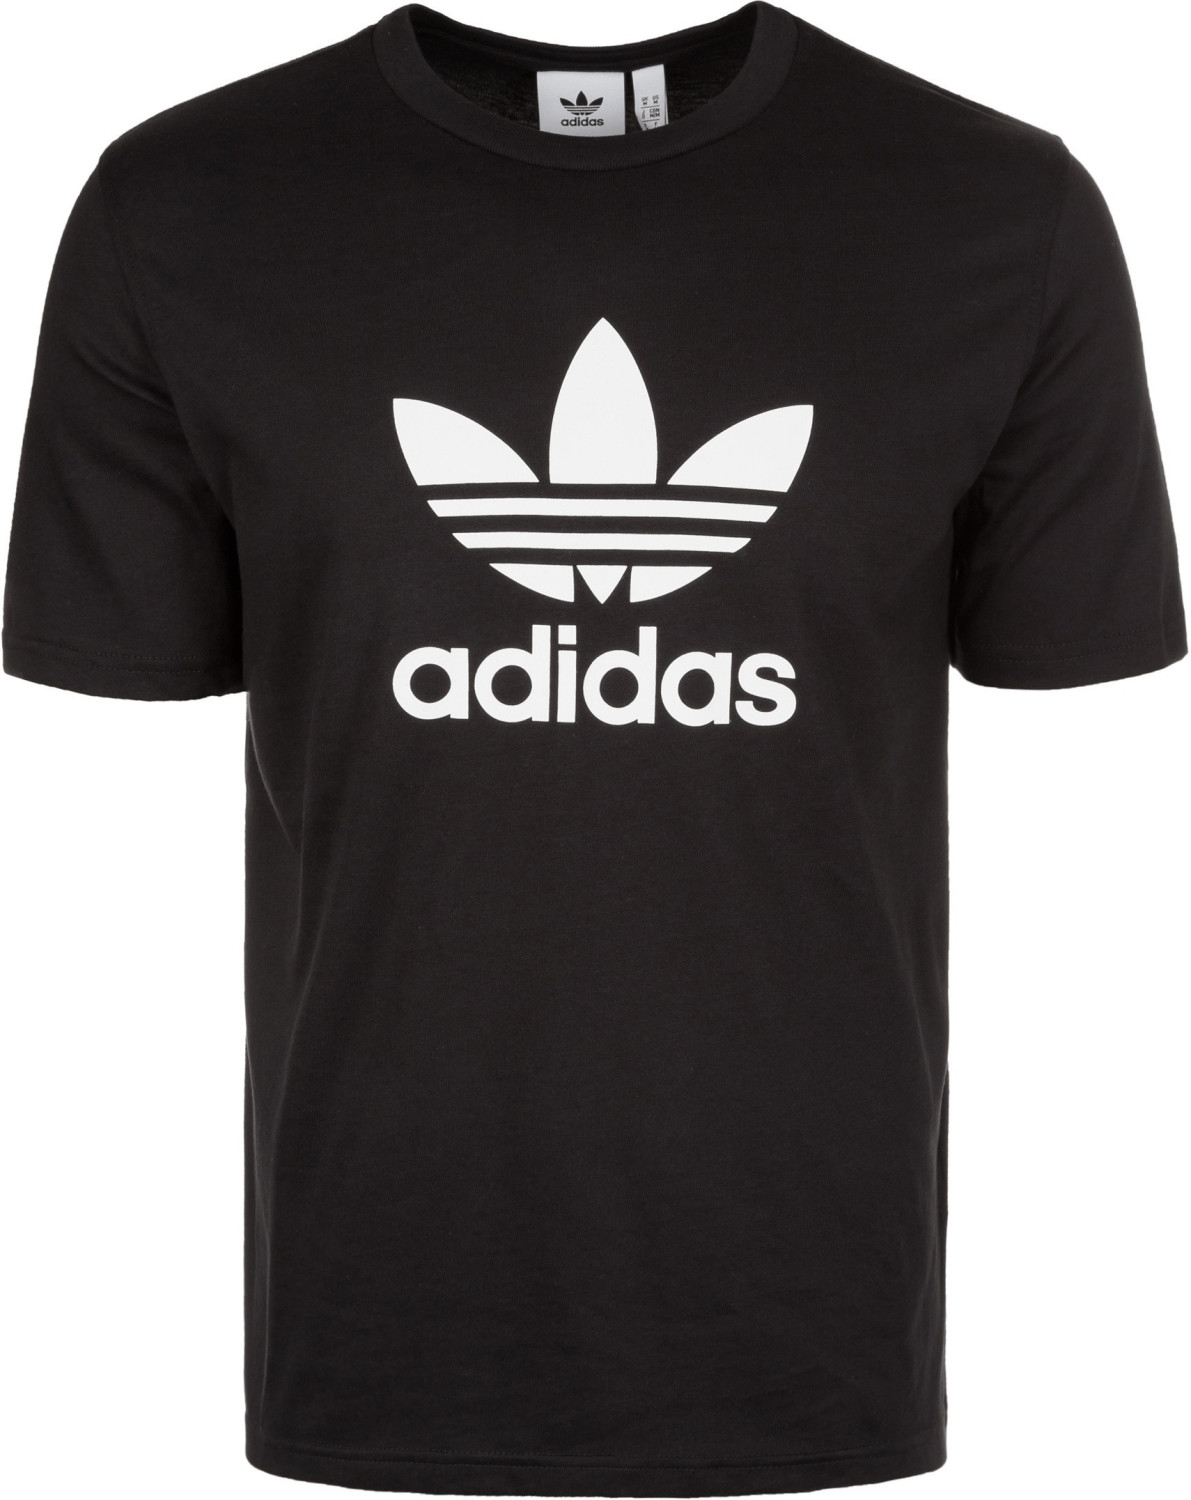 Adidas Originals Trefoil T-Shirt black (CW0709)